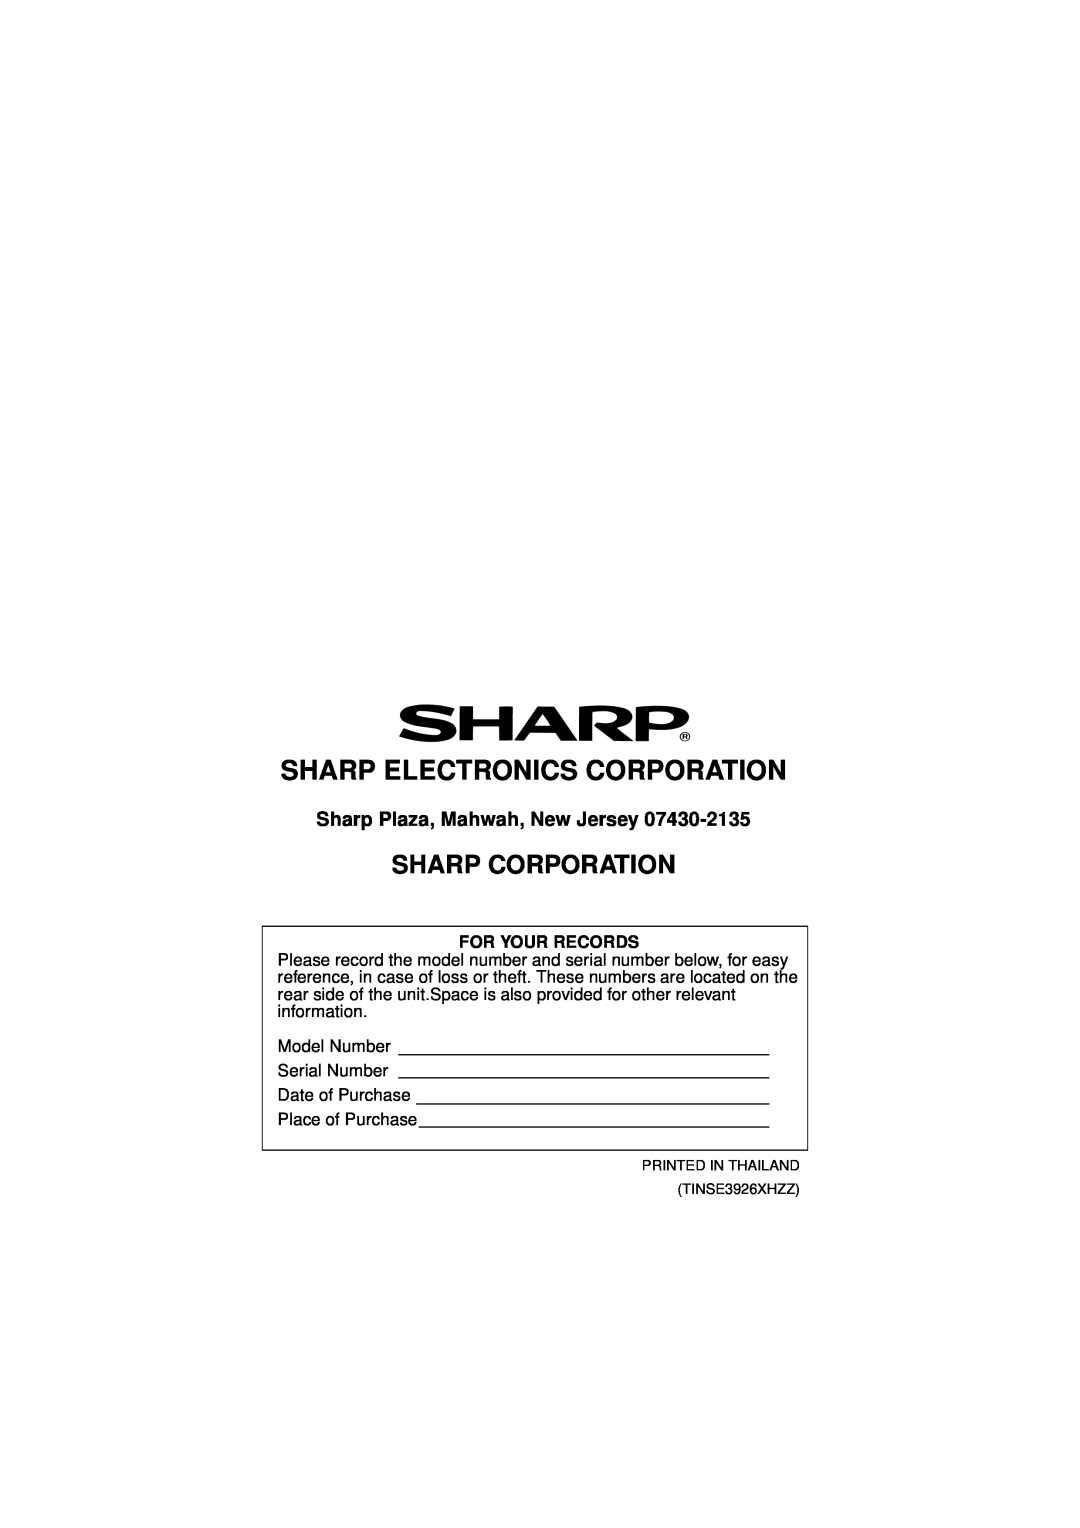 Sharp FO-4700, FO-5700 Sharp Electronics Corporation, Sharp Corporation, Sharp Plaza, Mahwah, New Jersey, For Your Records 